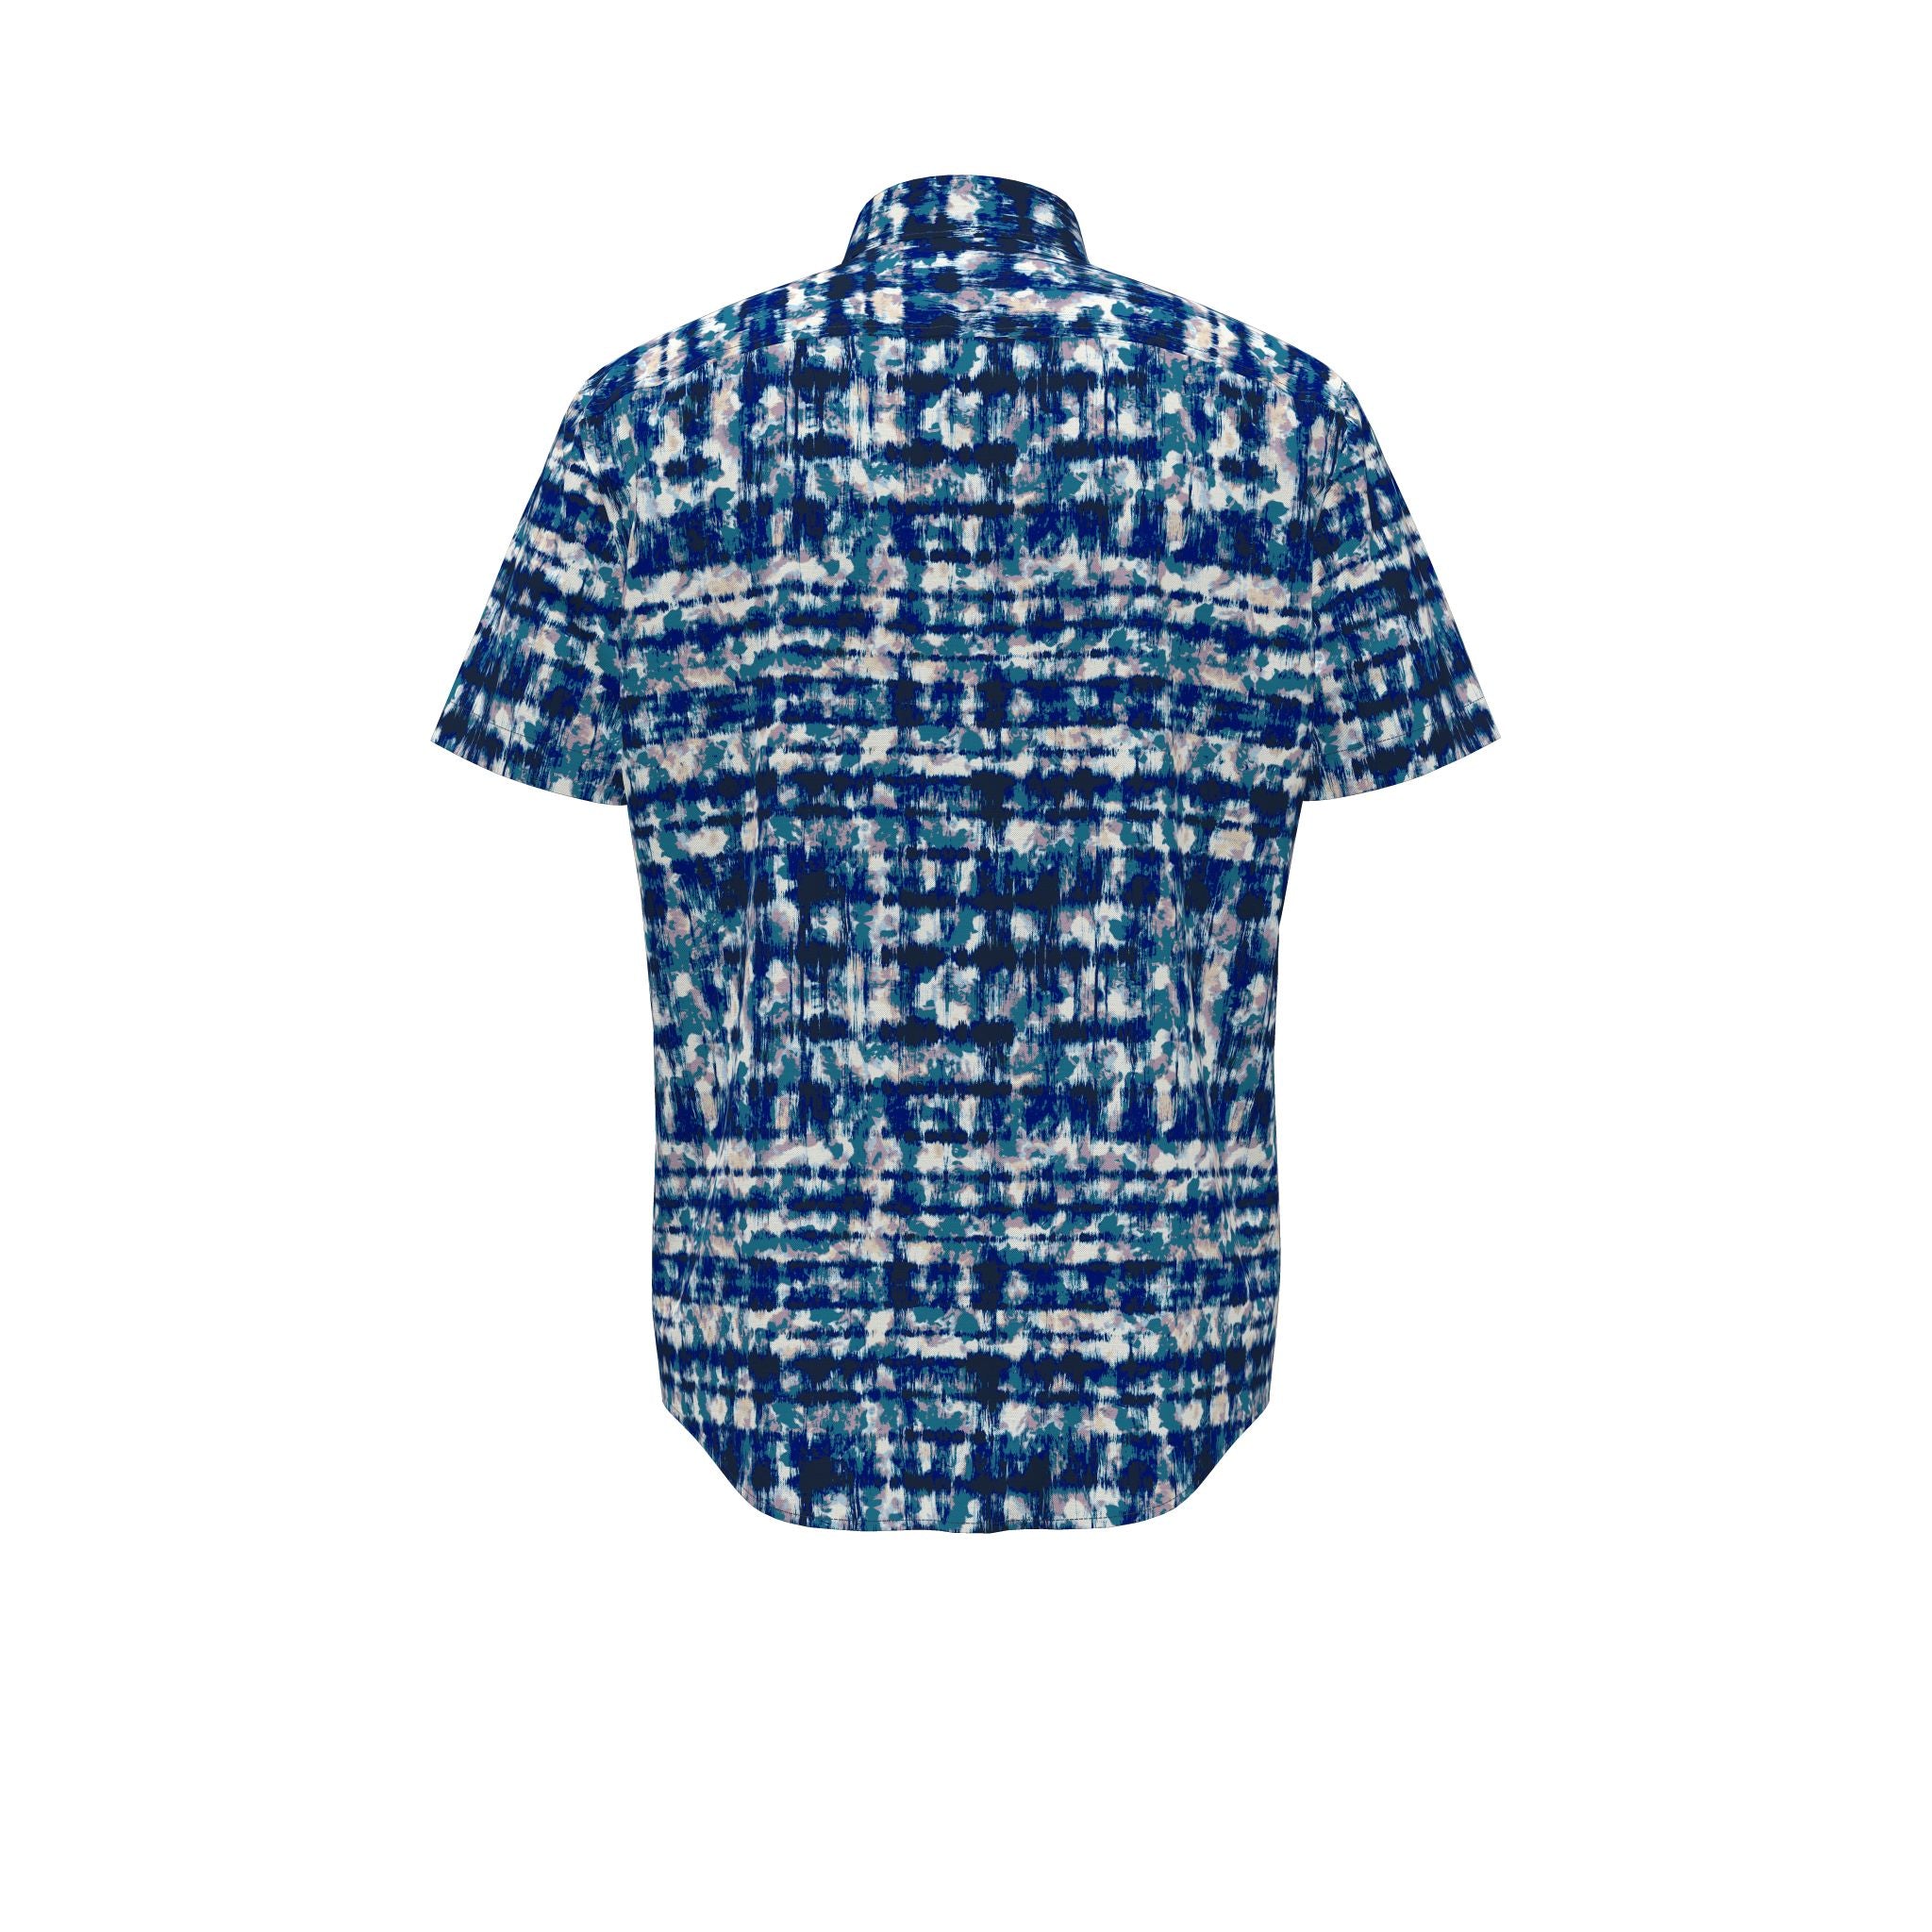 Penguin - Short Sleeve Linen Button Up in Tie Dye Mazarine Blue